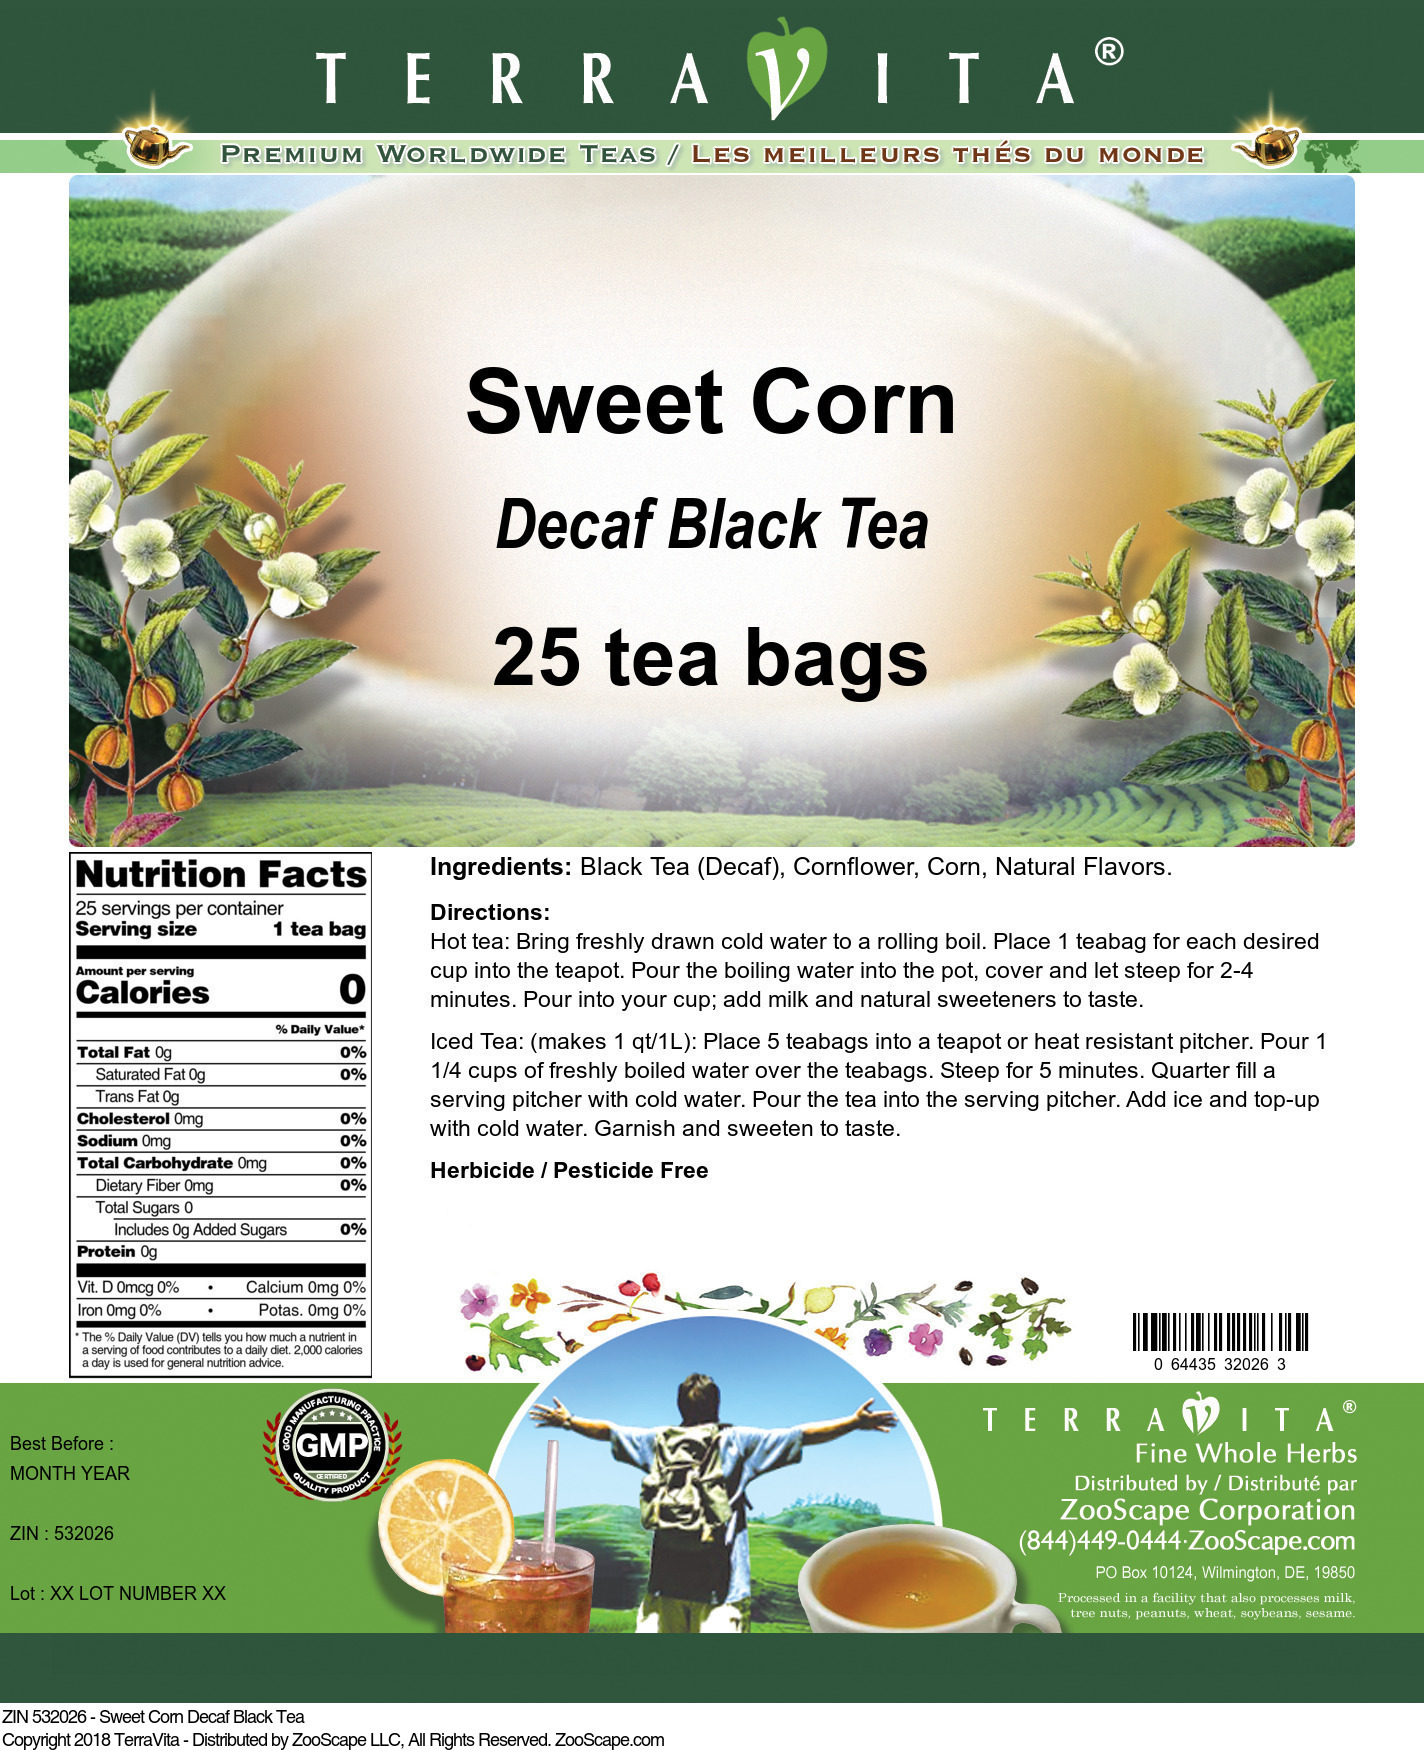 Sweet Corn Decaf Black Tea - Label